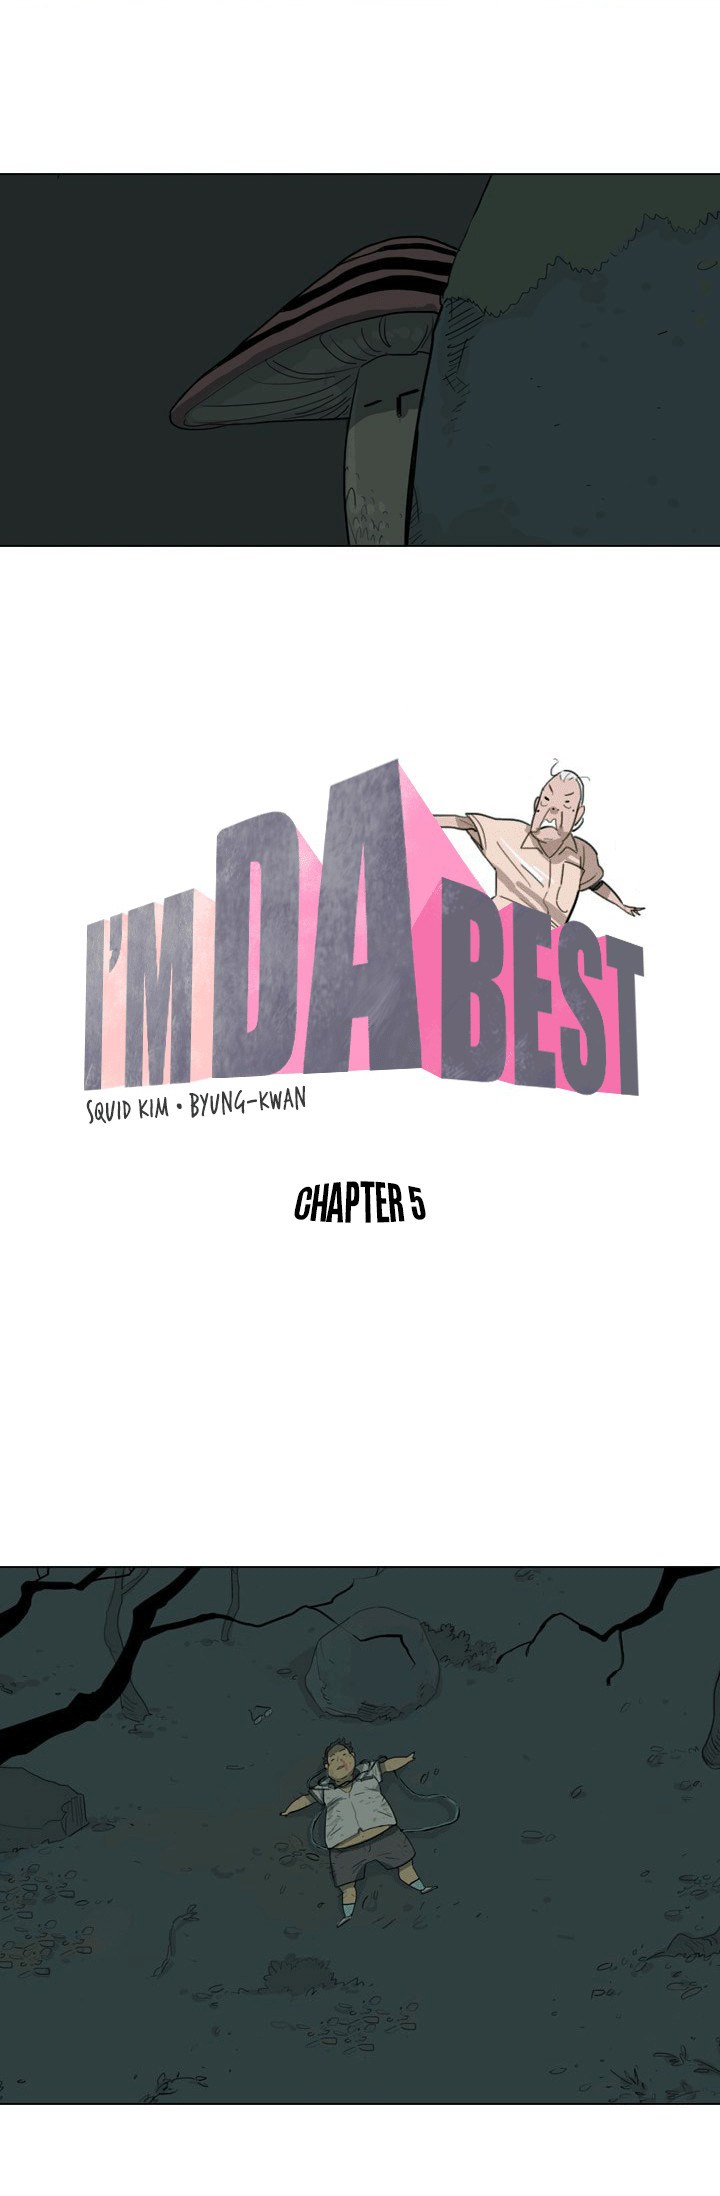 I’m da best Chapter 5